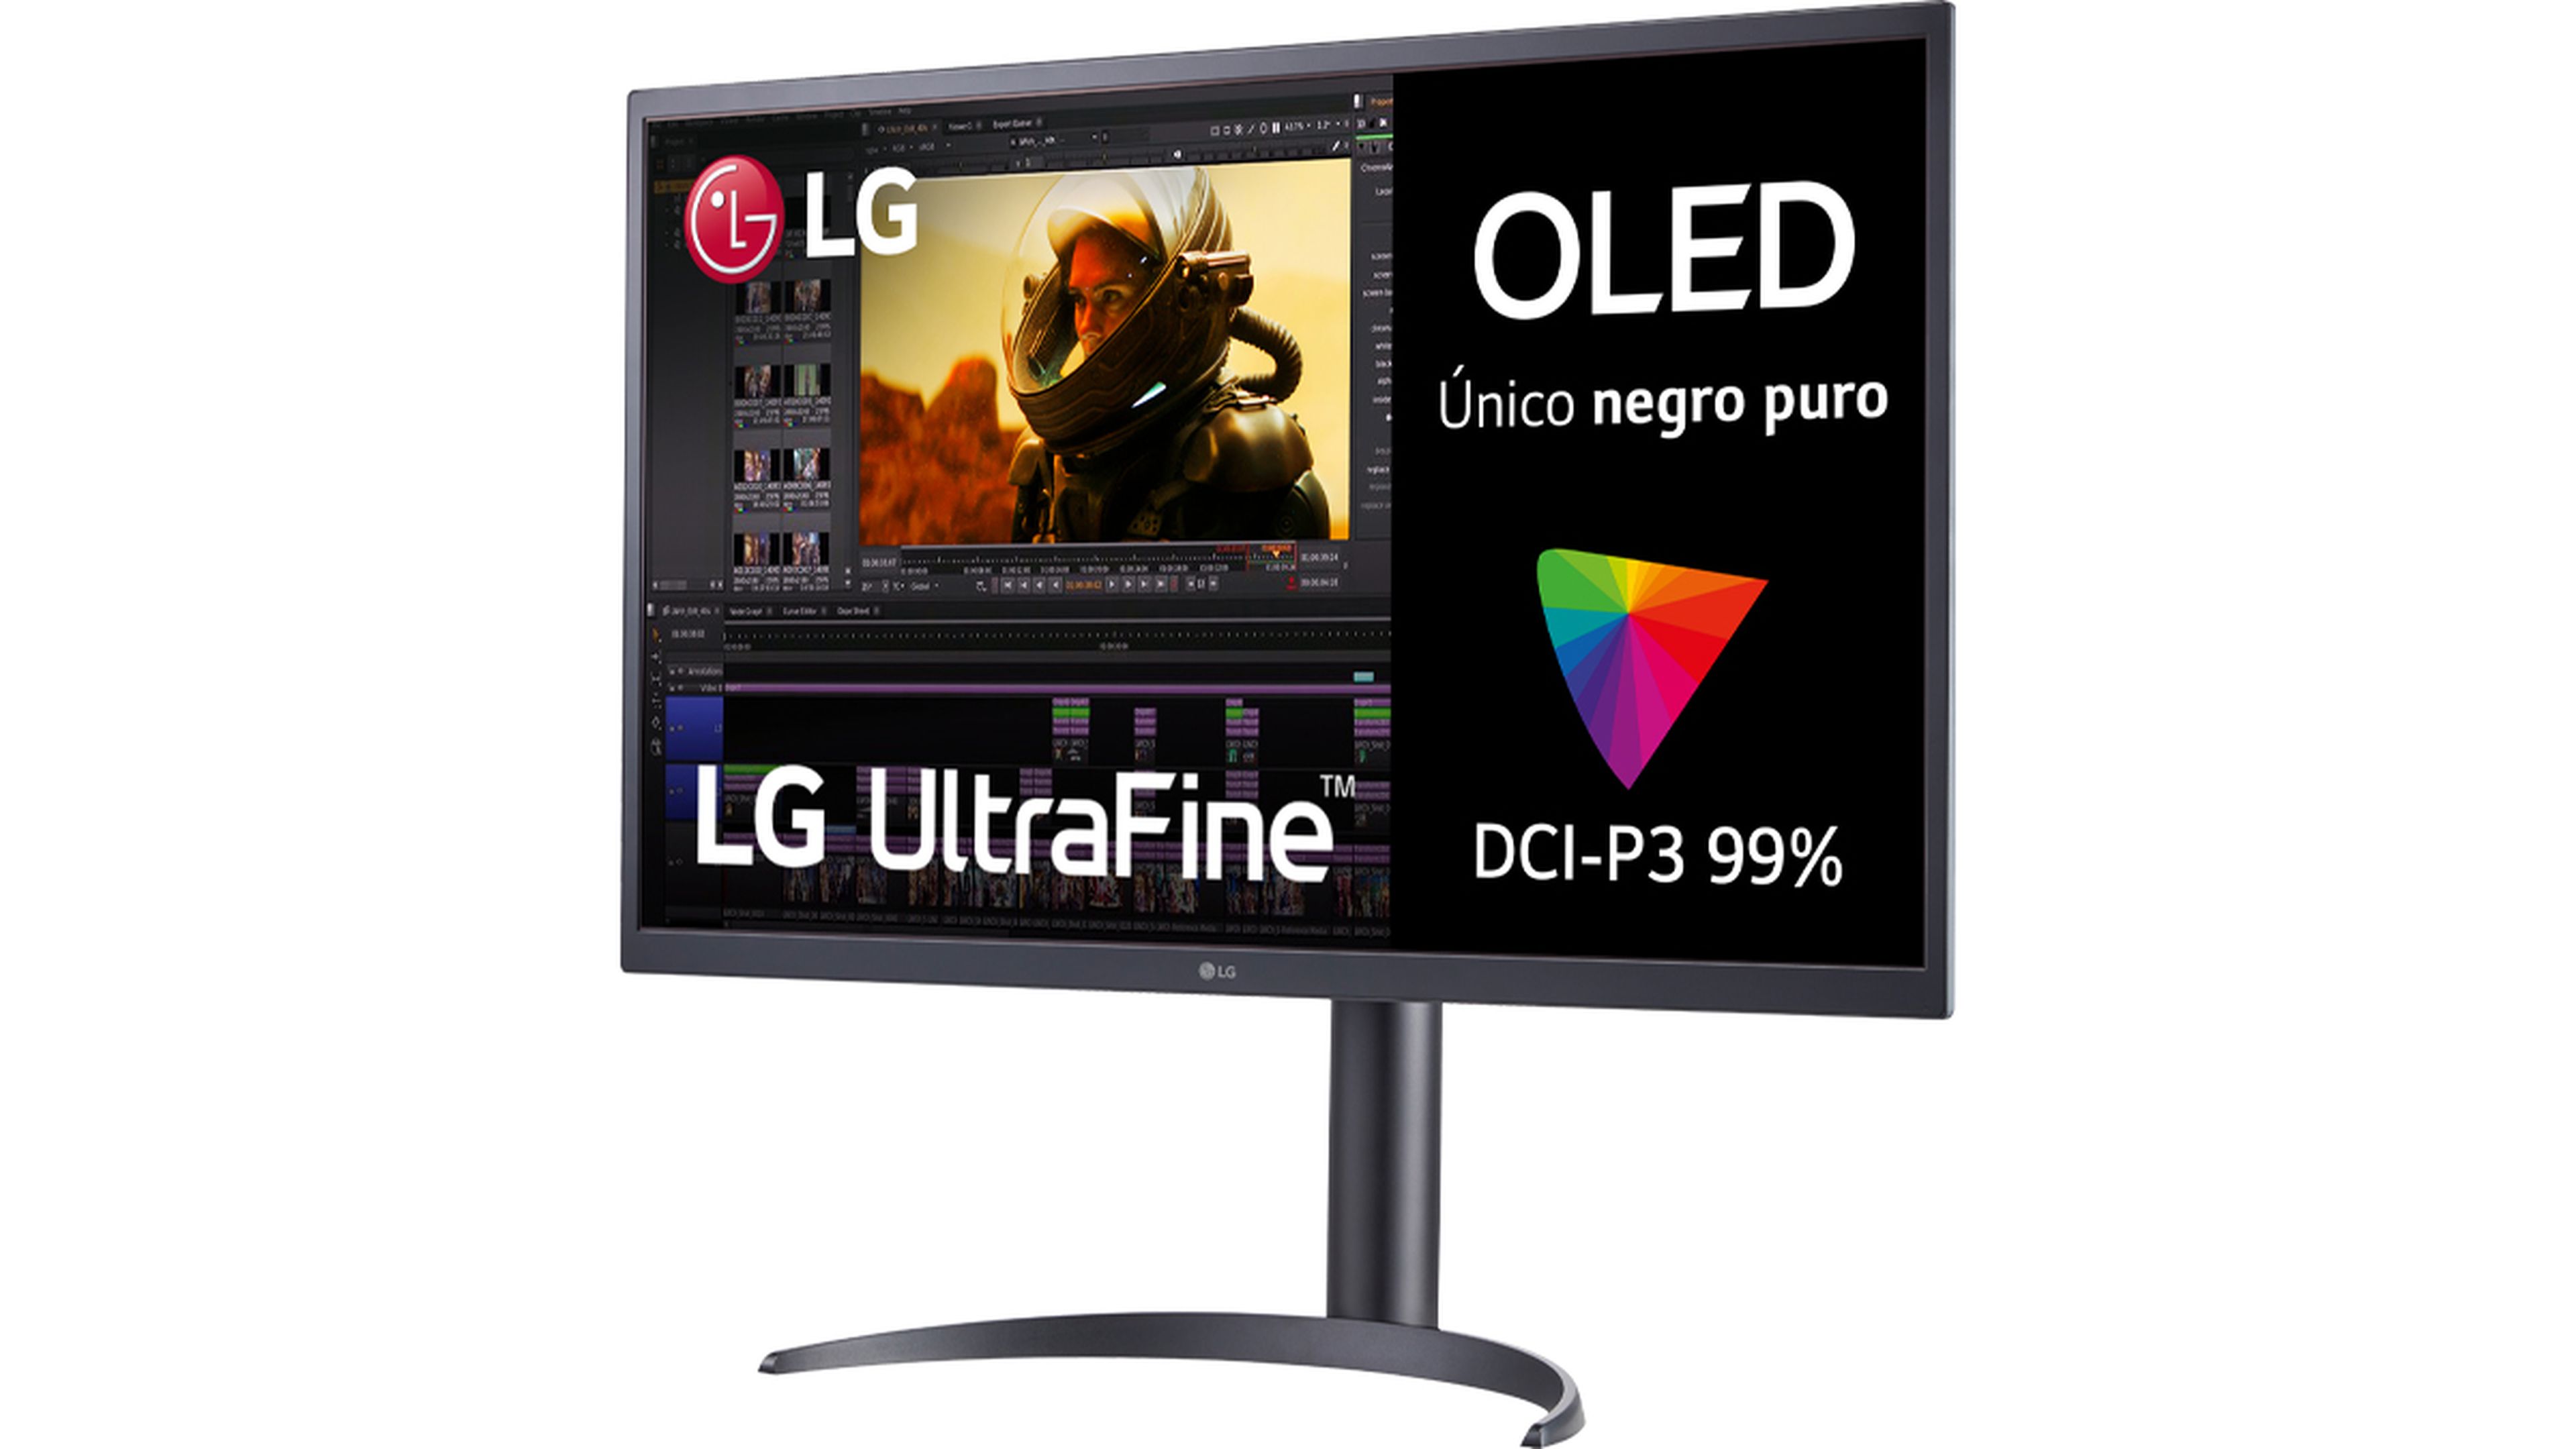 LG Ultrafine OLED